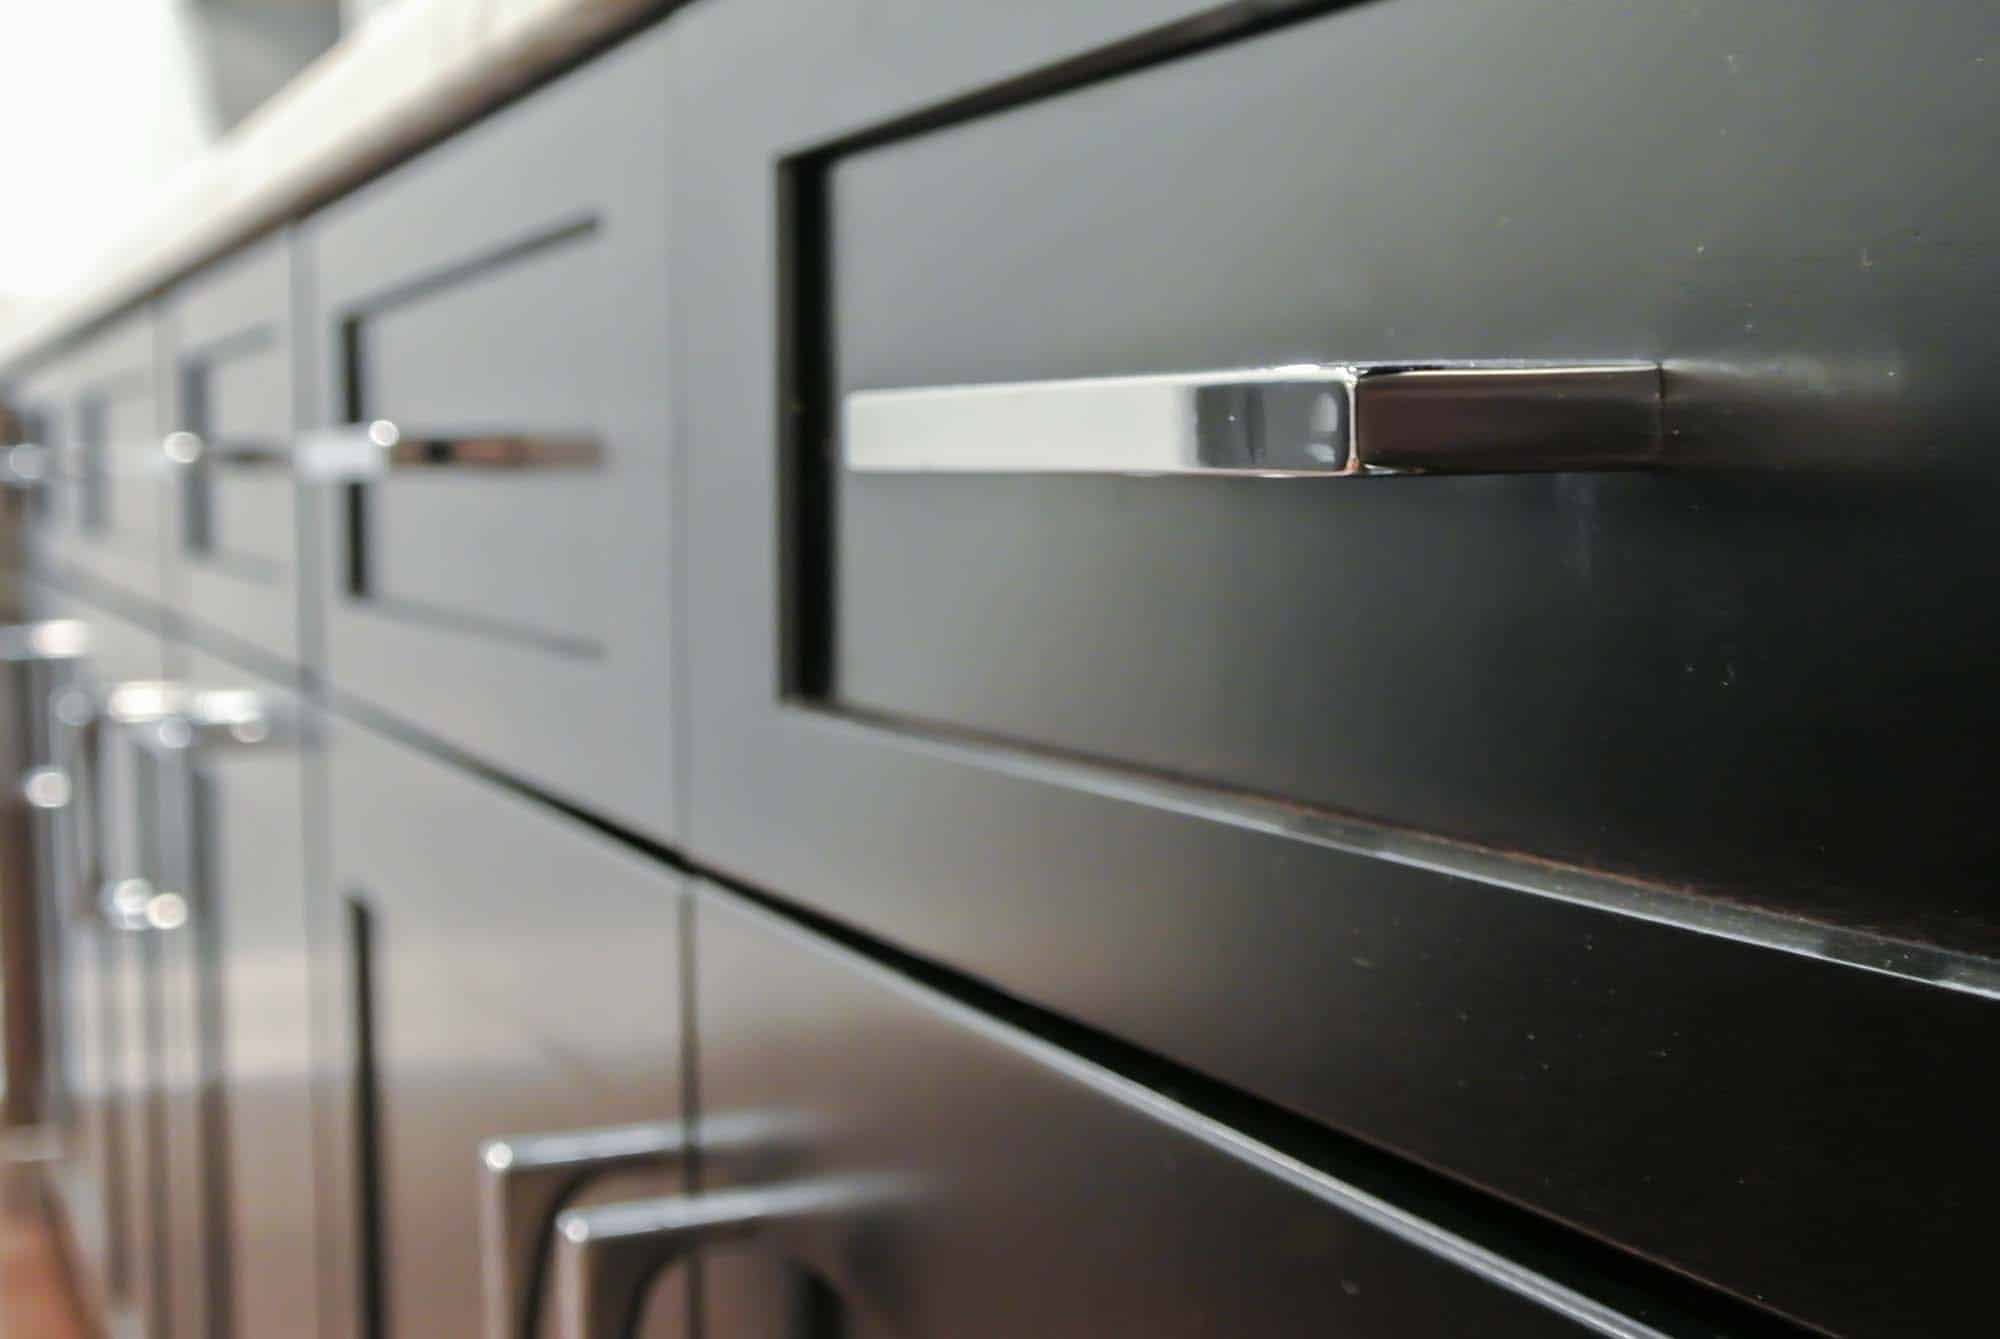 Stainless Steel Black Kitchen Square Corner Cabinet Handles Drawer Pulls  Knobs